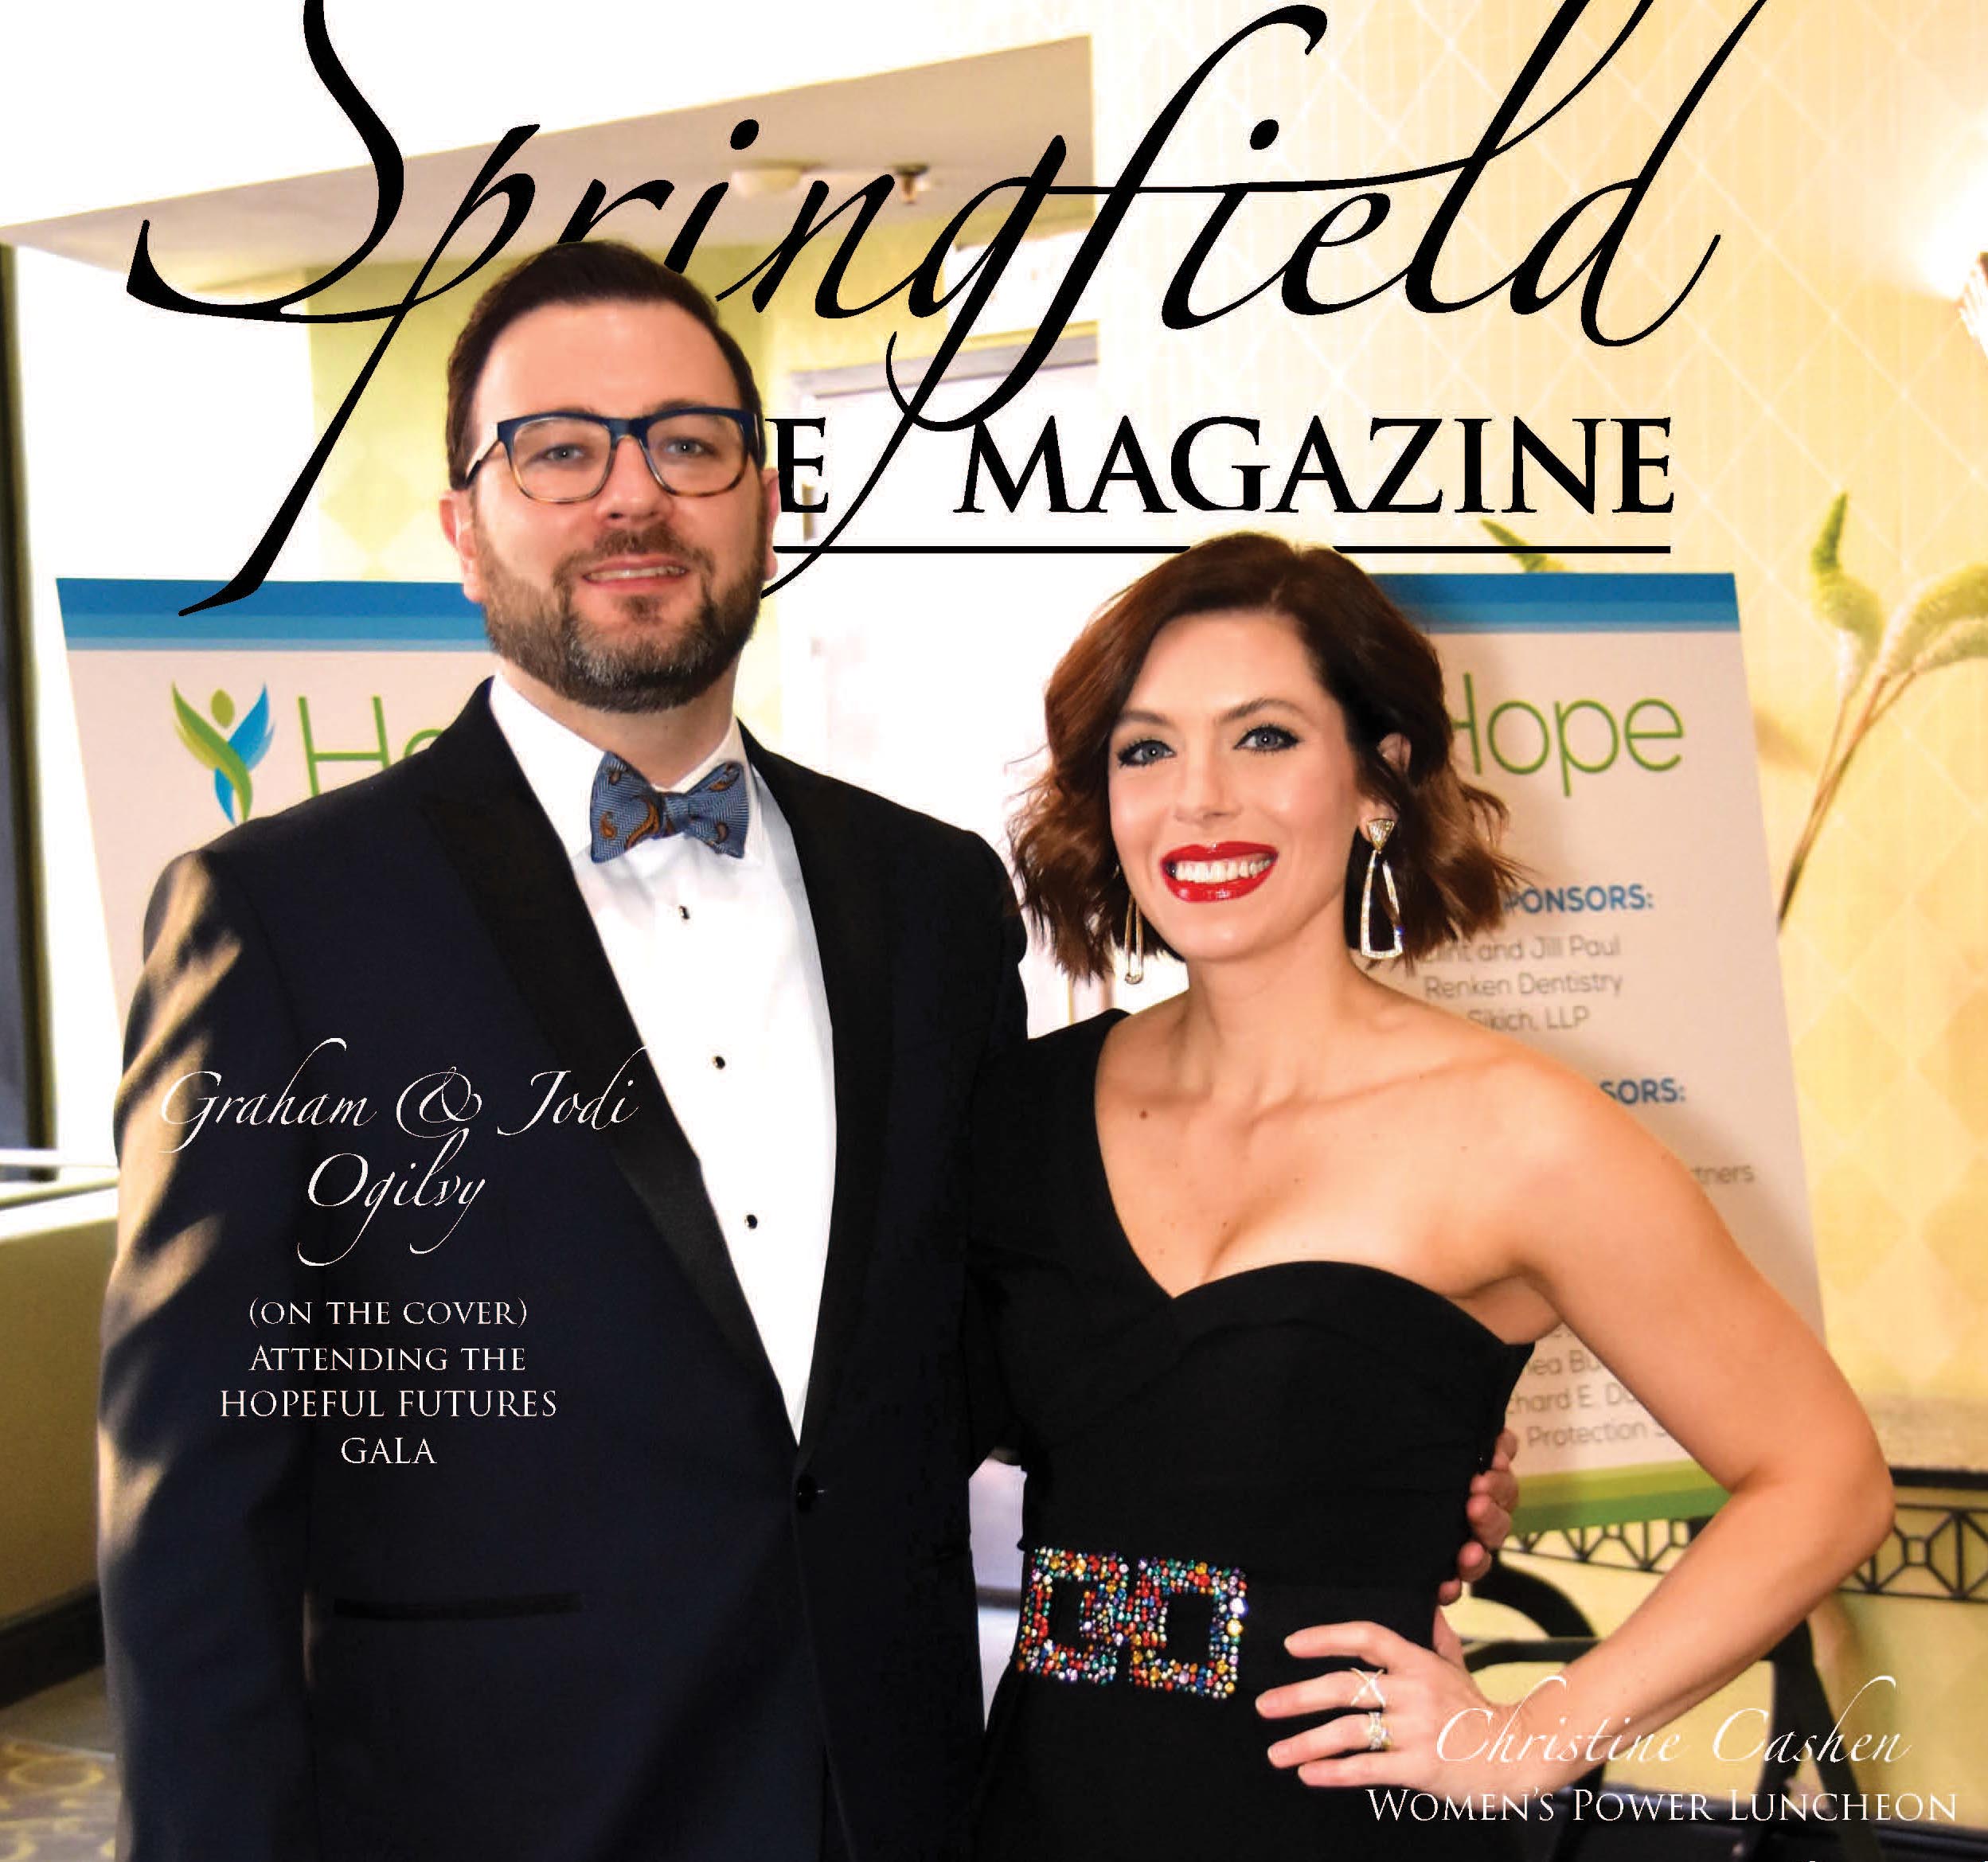 Springfield Scene Magazine Issue 3 May/June 2022 Digital Issue